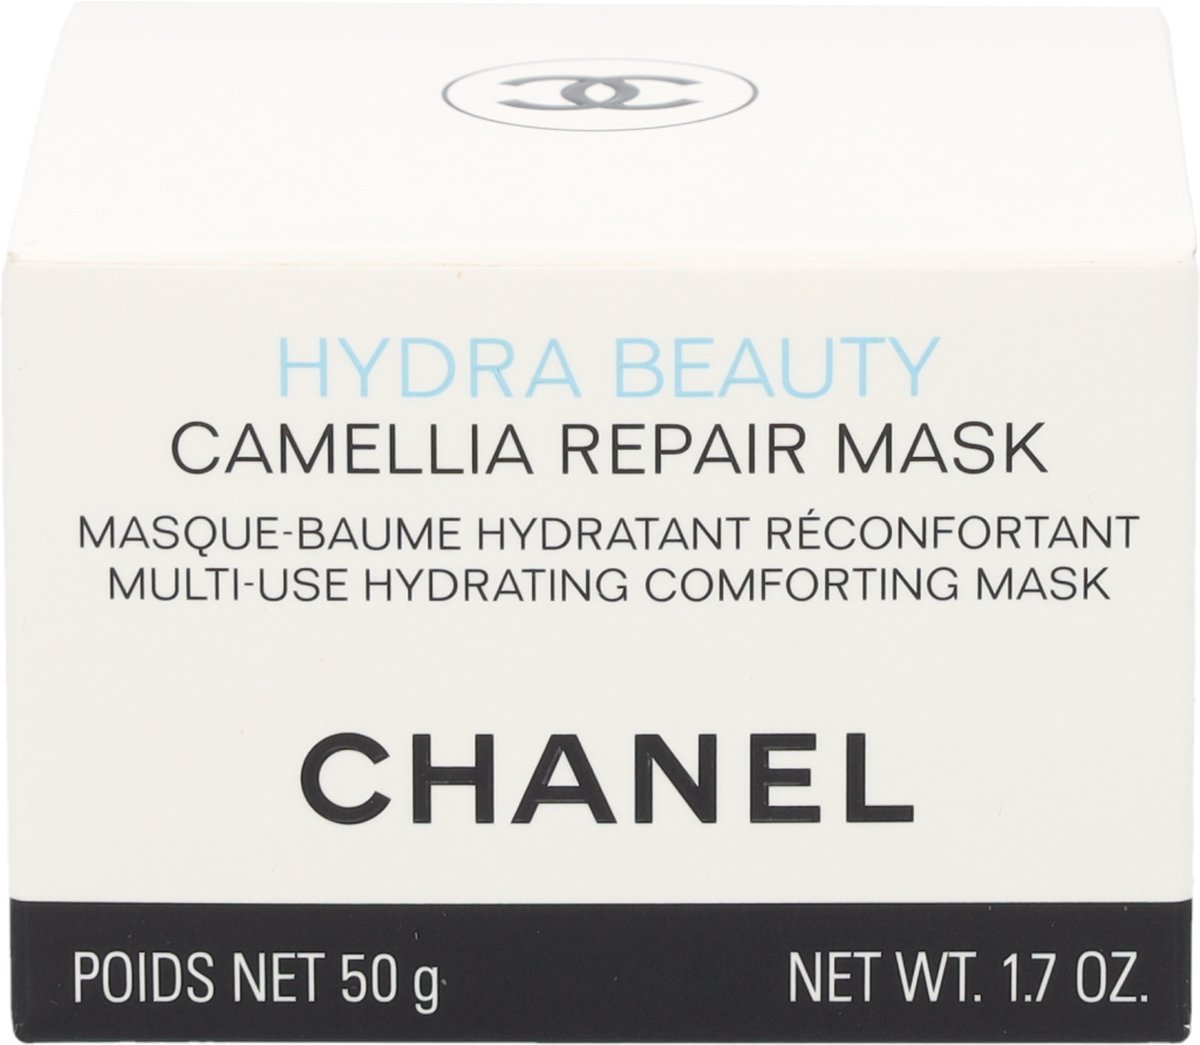 CHANEL Hydra Beauty Camellia Repair Mask 50g